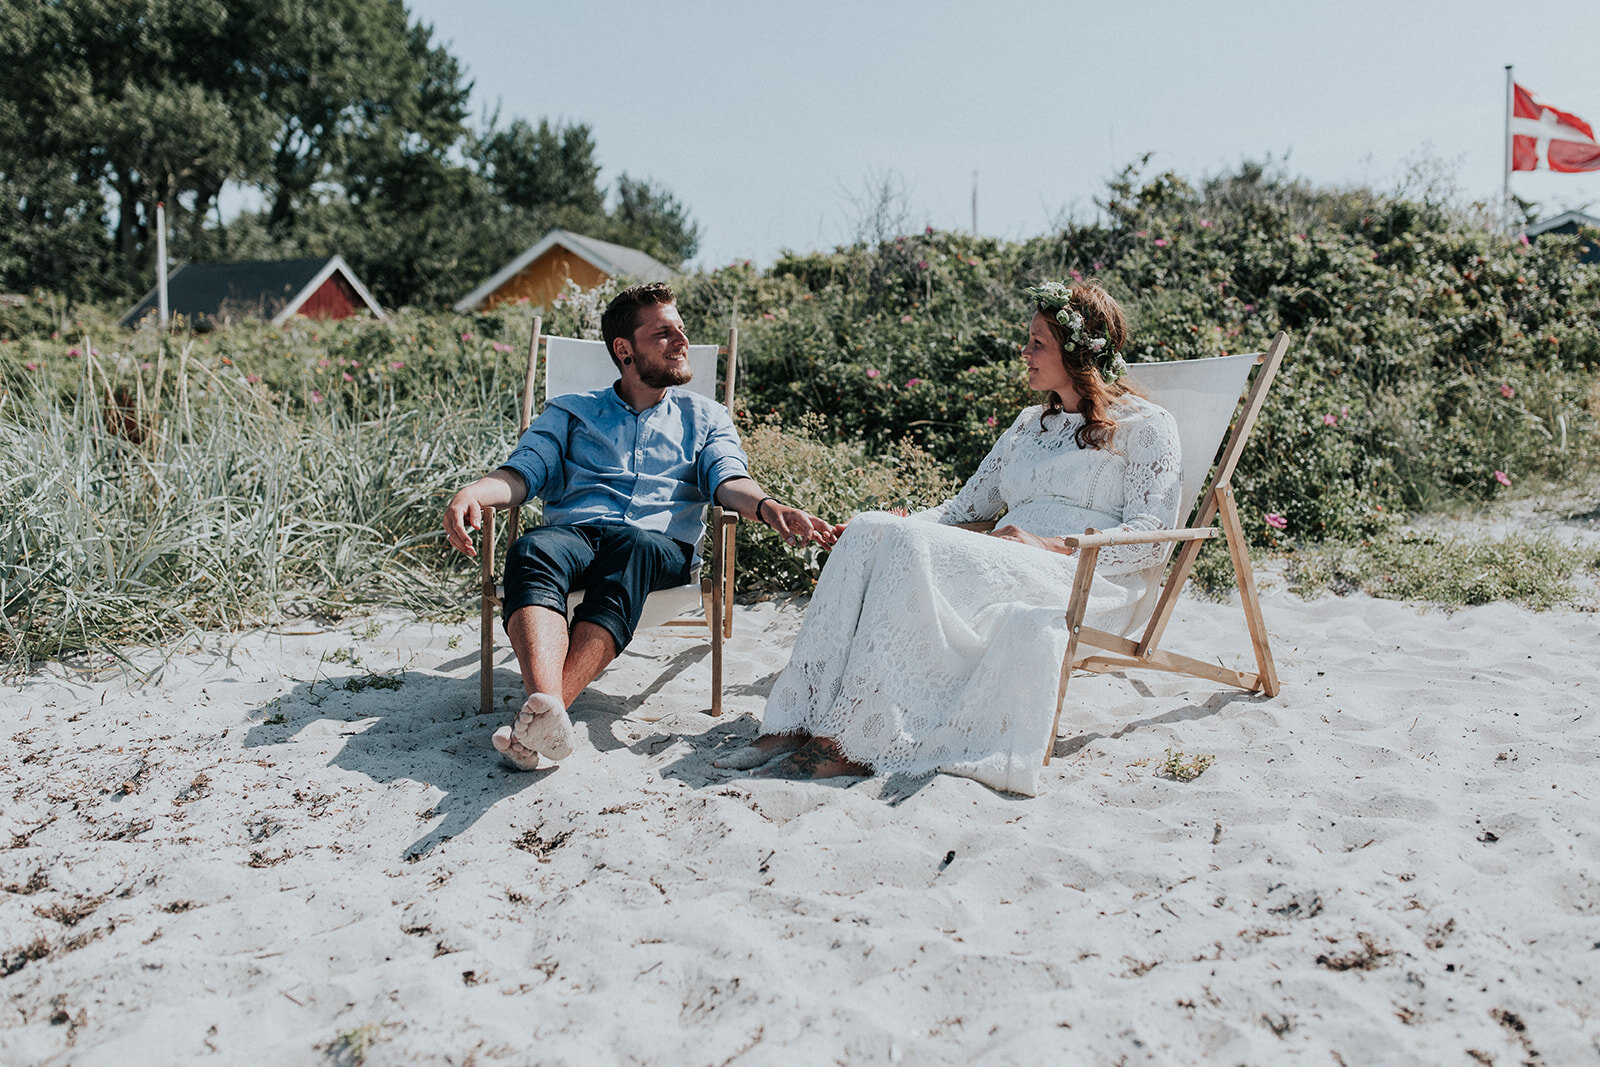 bride and groom at beach wedding ceremony - aero island, denmark - european destination wedding planned by danish island weddings